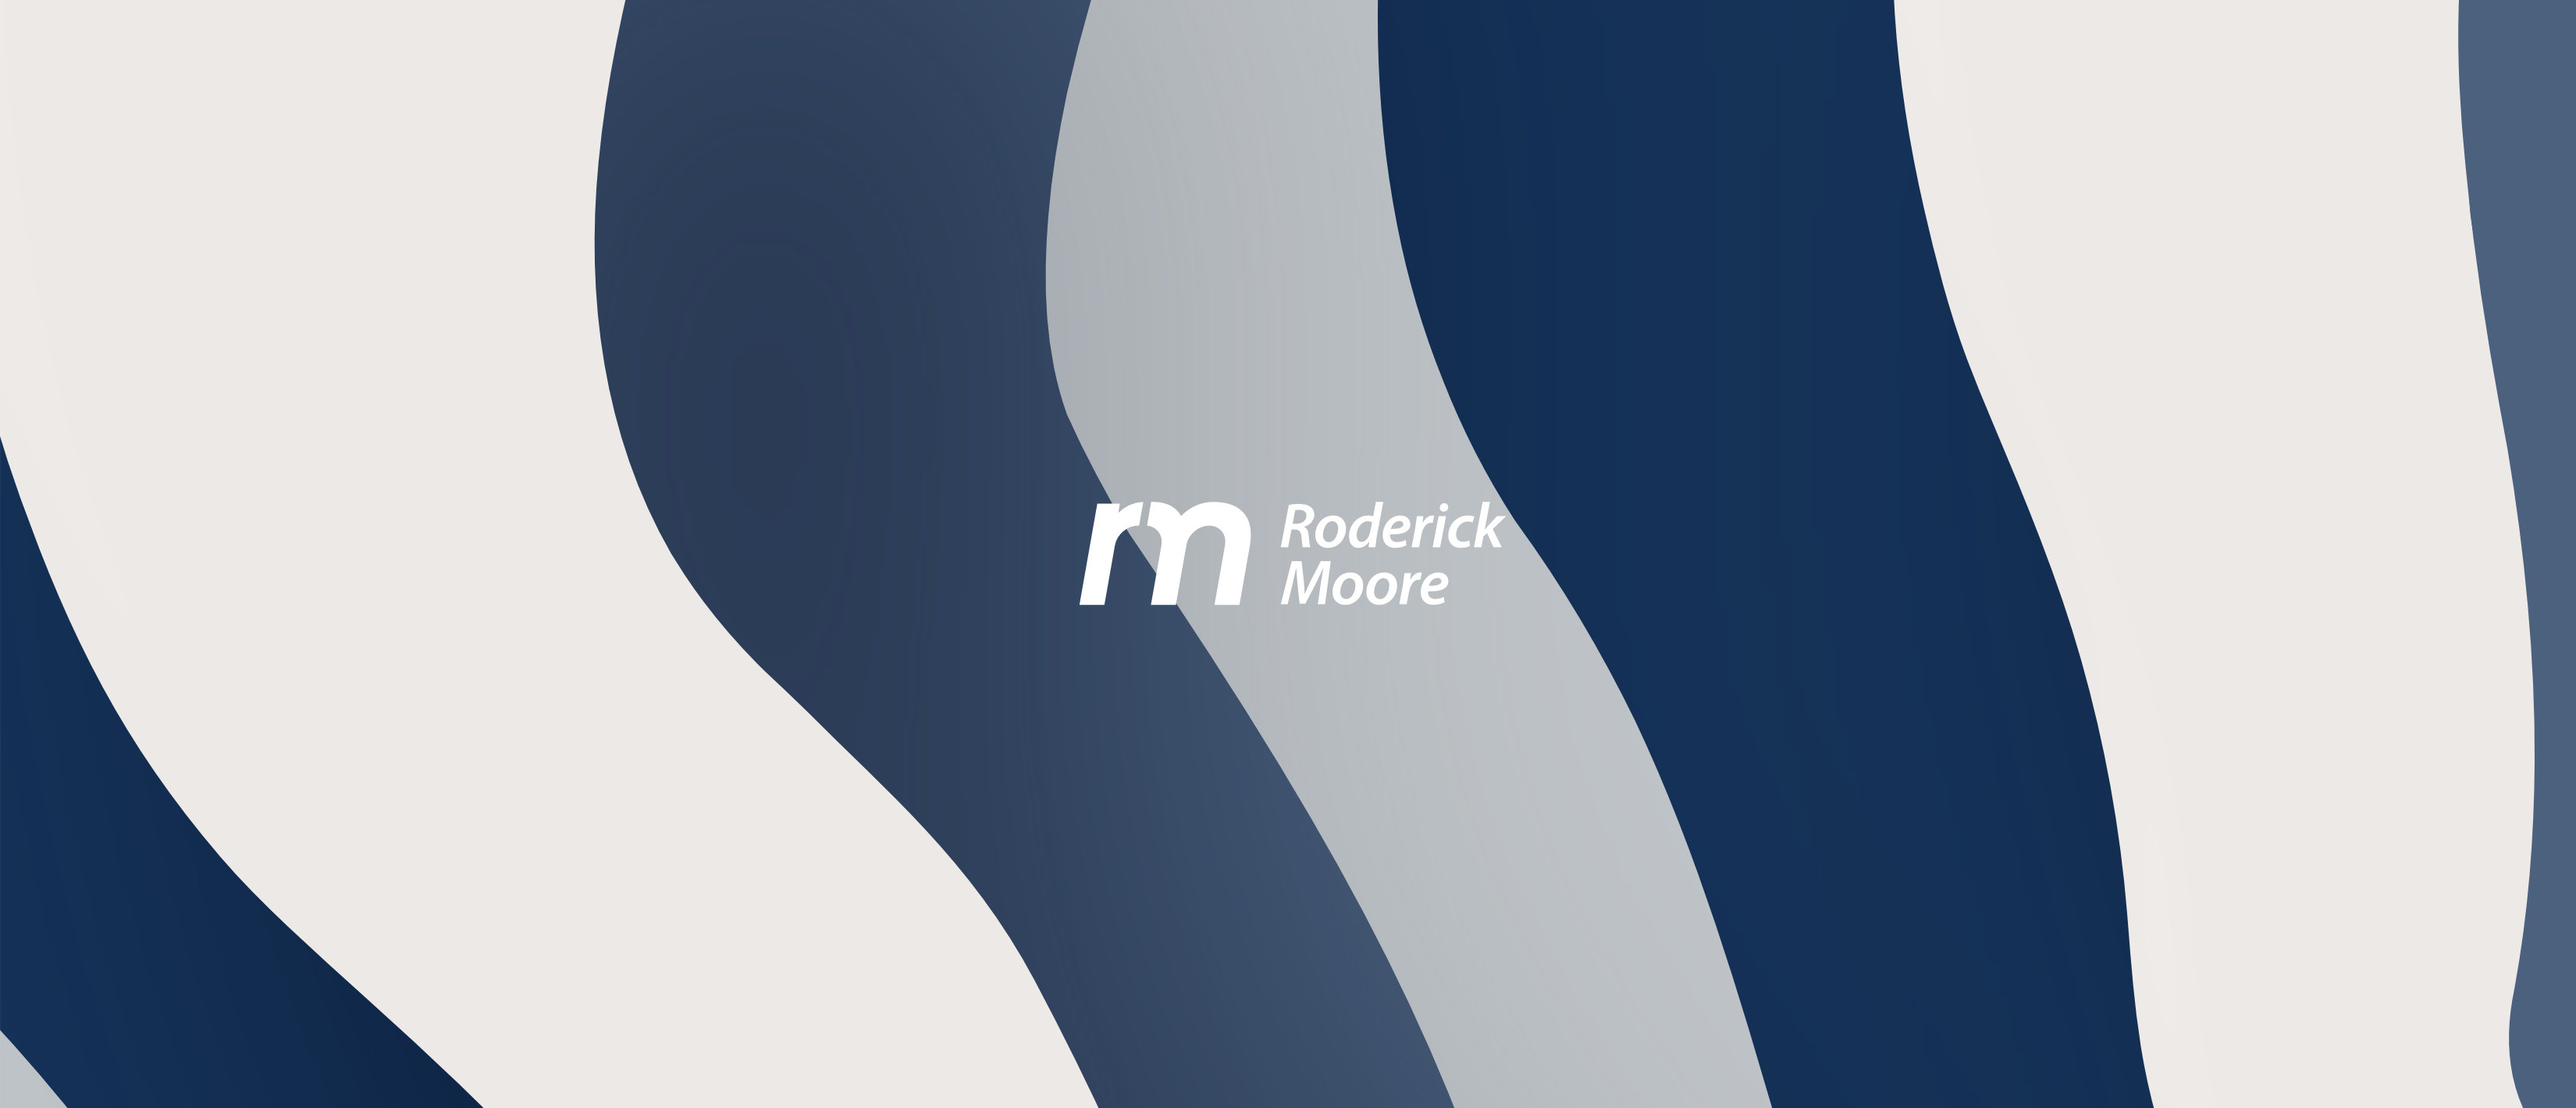 Roderick moore logo banner